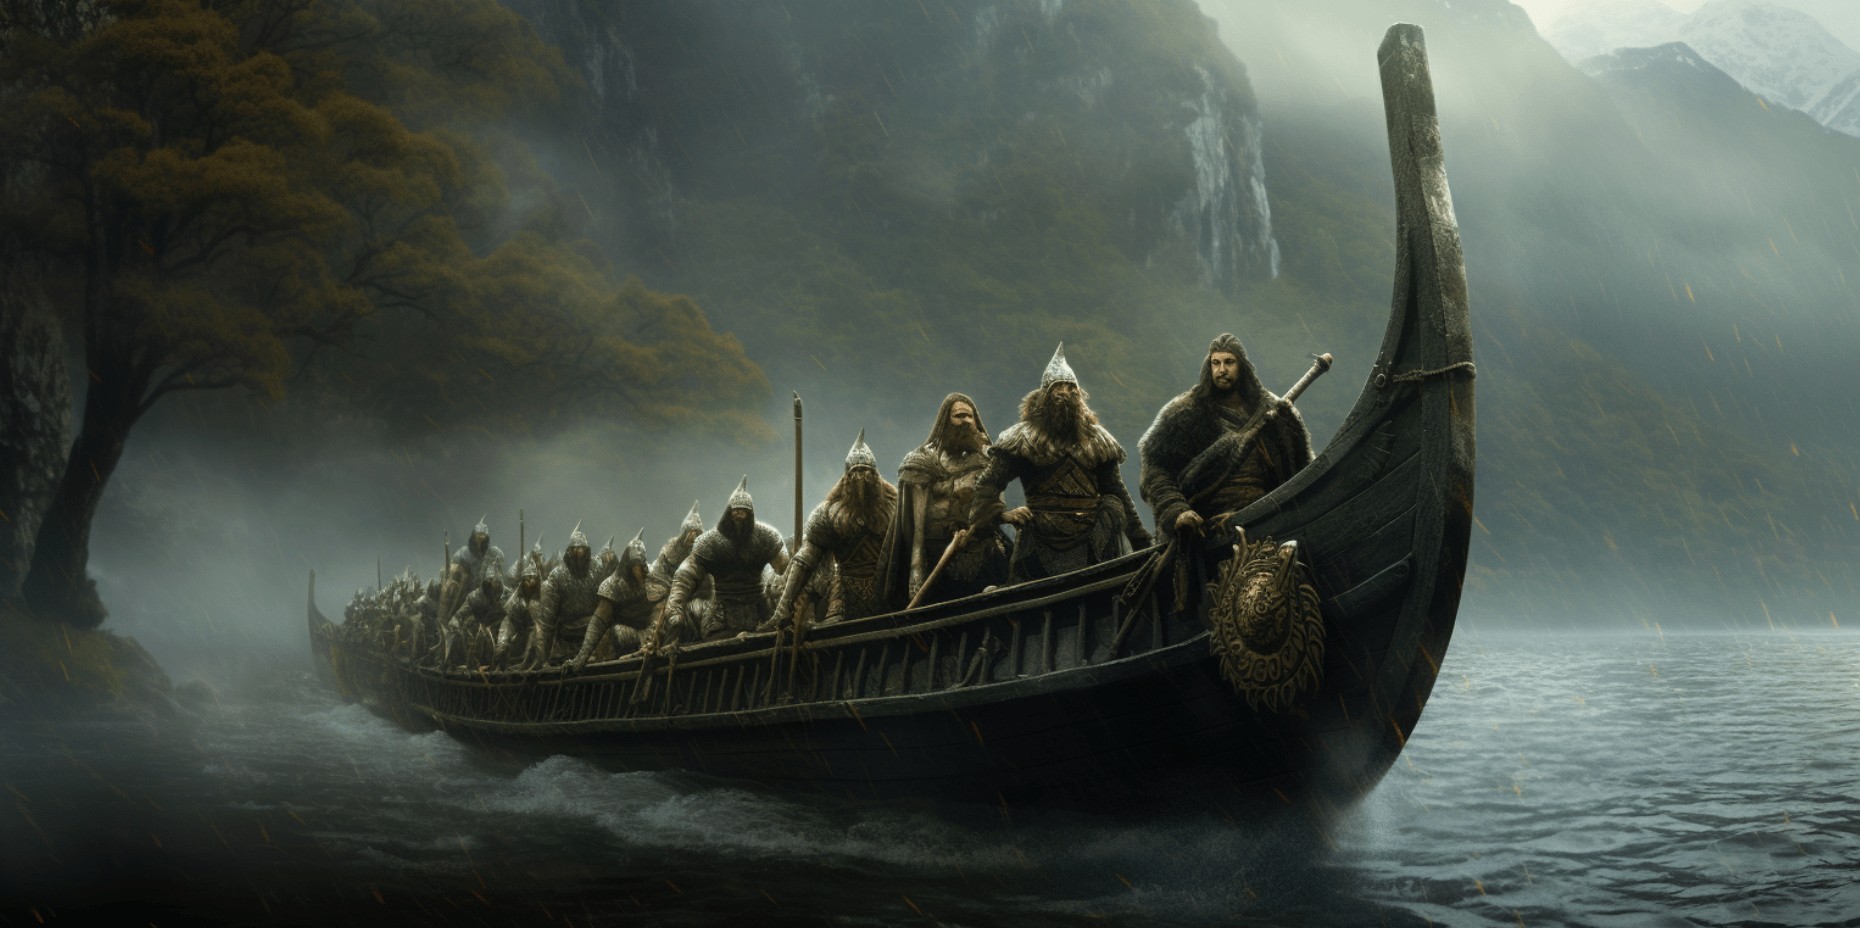 The Viking blót sacrifices